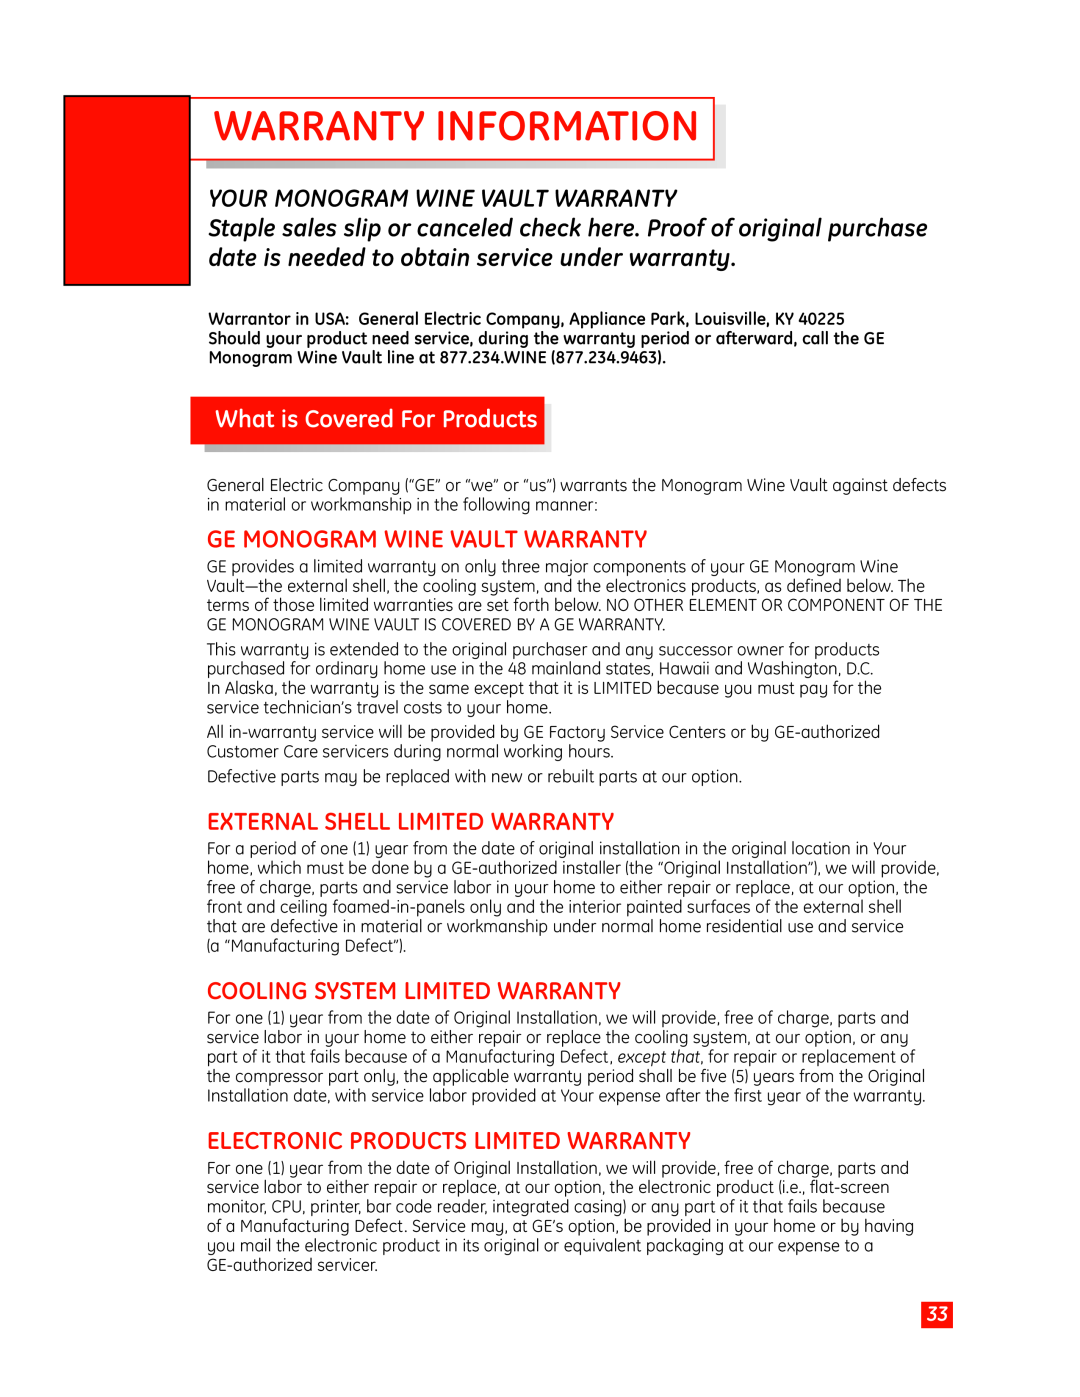 GE Monogram owner manual Warranty Information, Your Monogram Wine Vault Warranty, Ge Monogram Wine Vault Warranty 